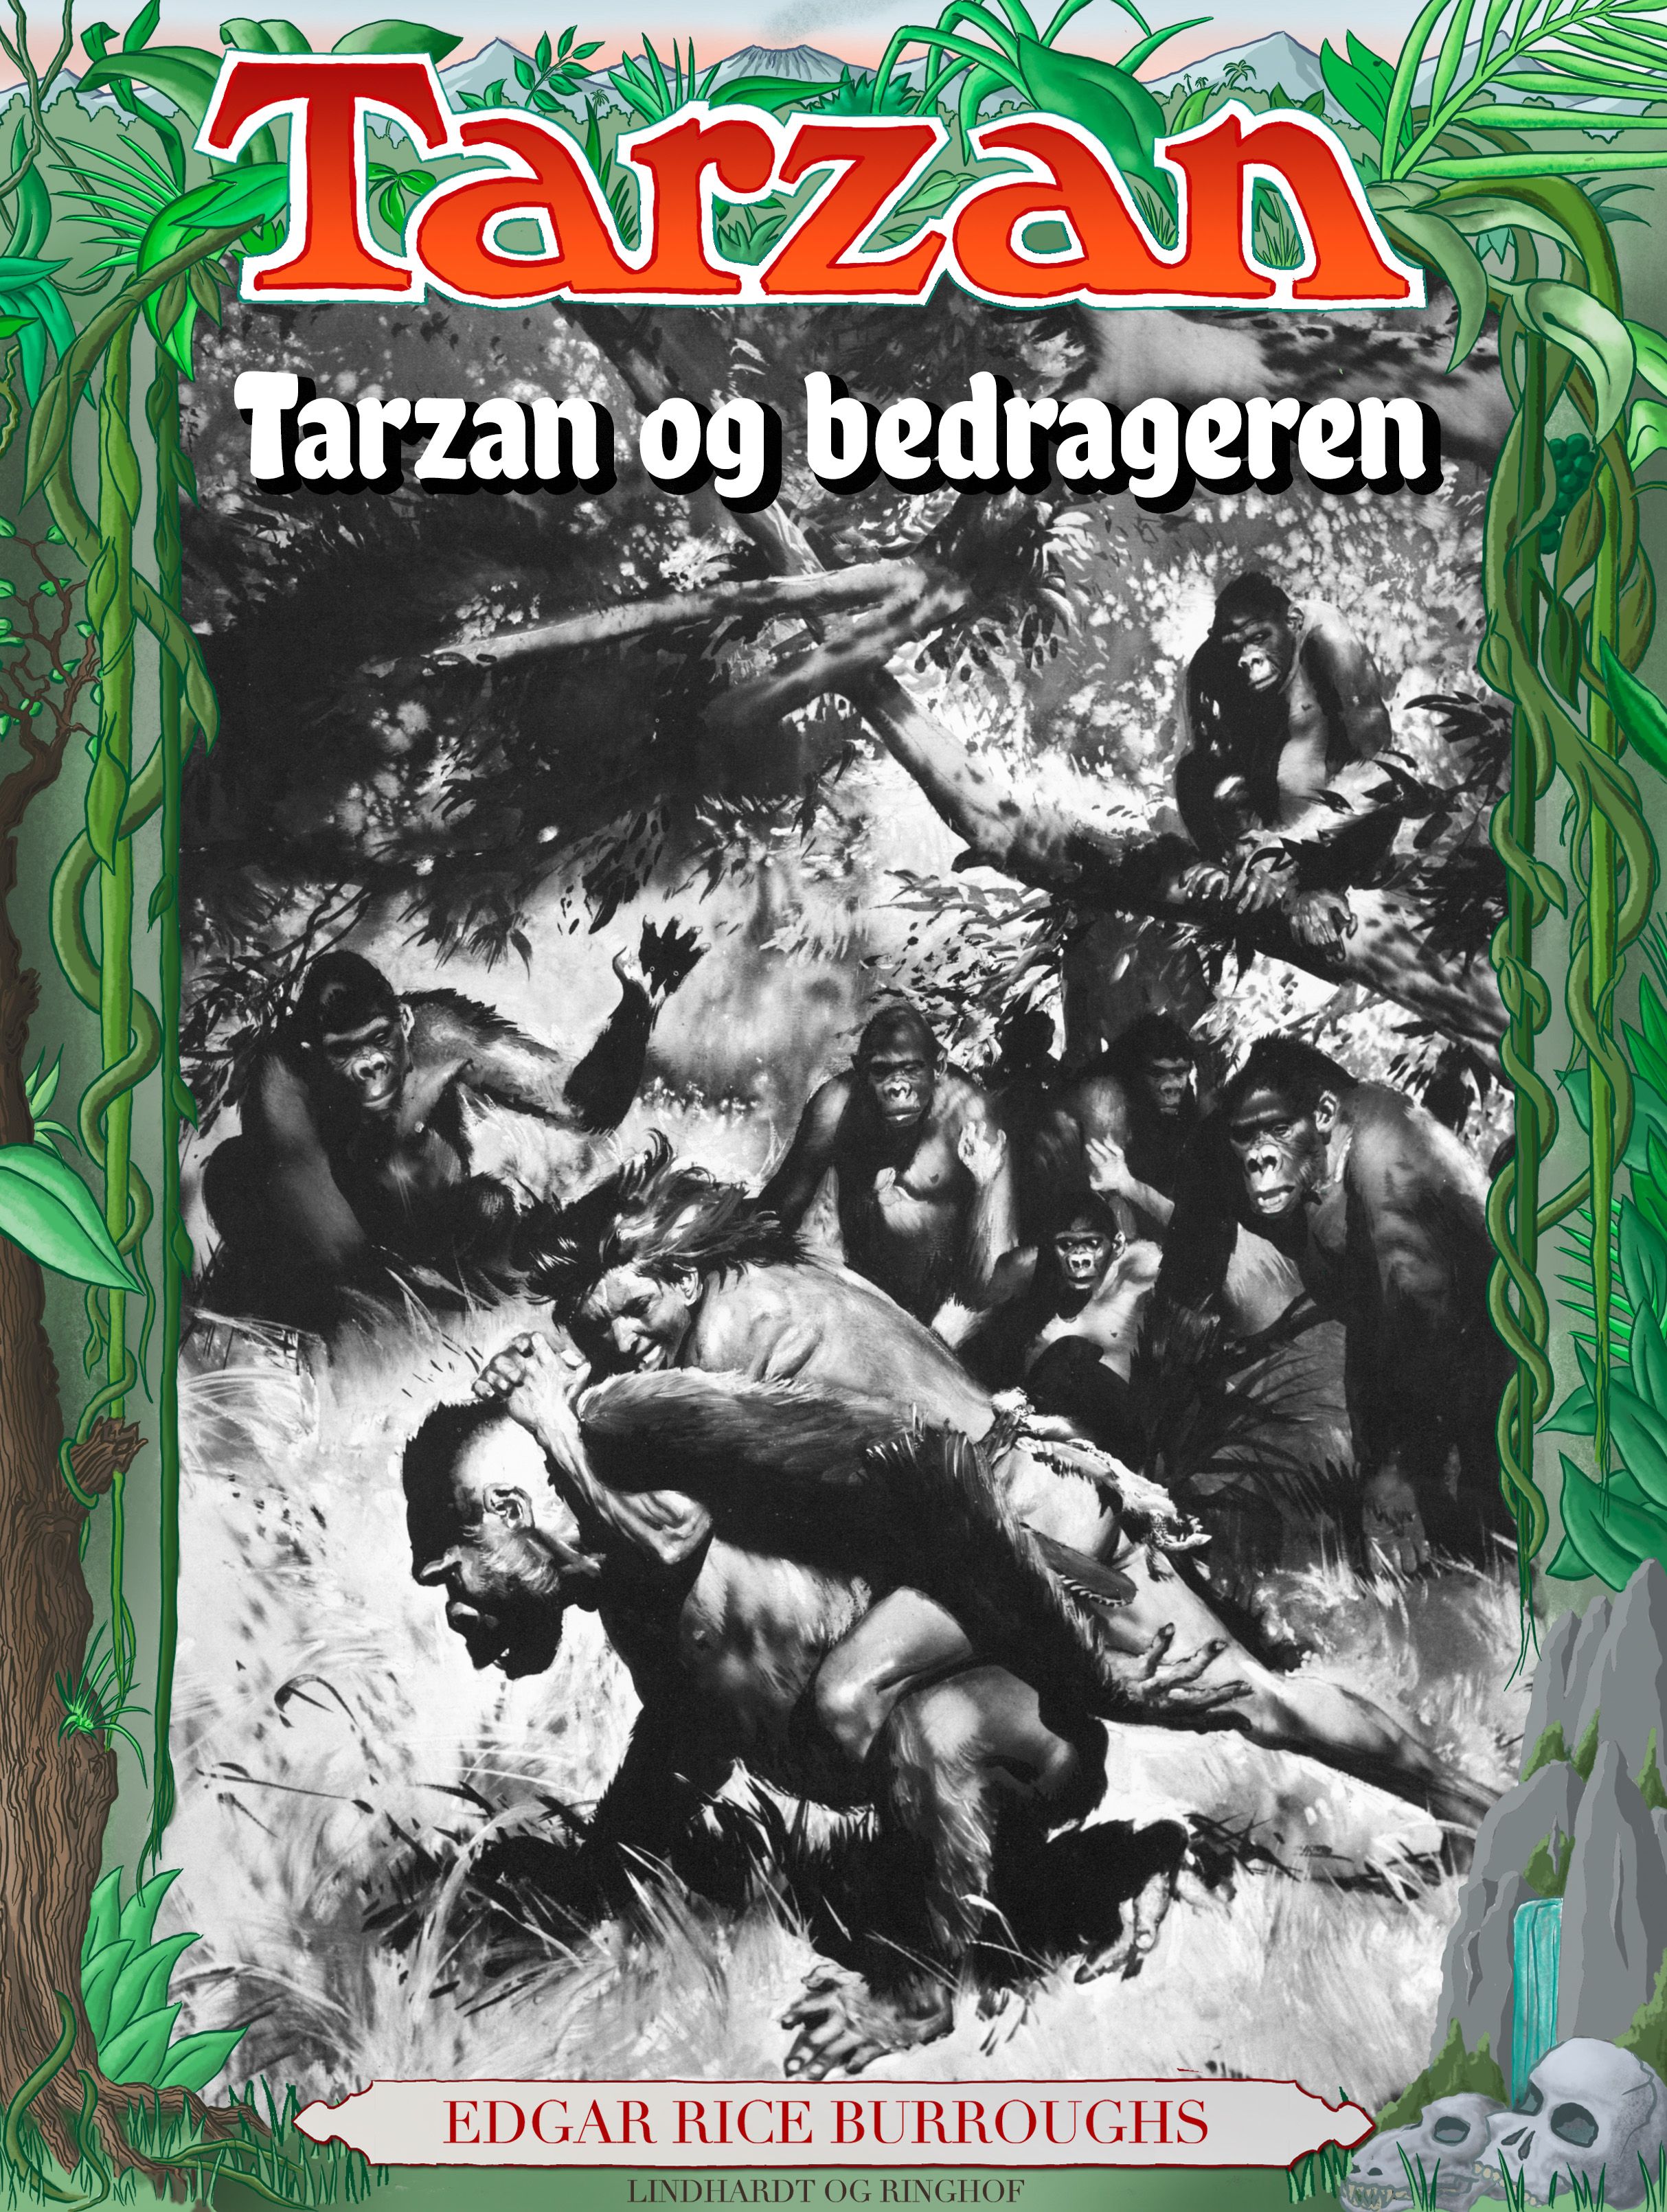 Tarzan og bedrageren, eBook by Edgar Rice Burroughs